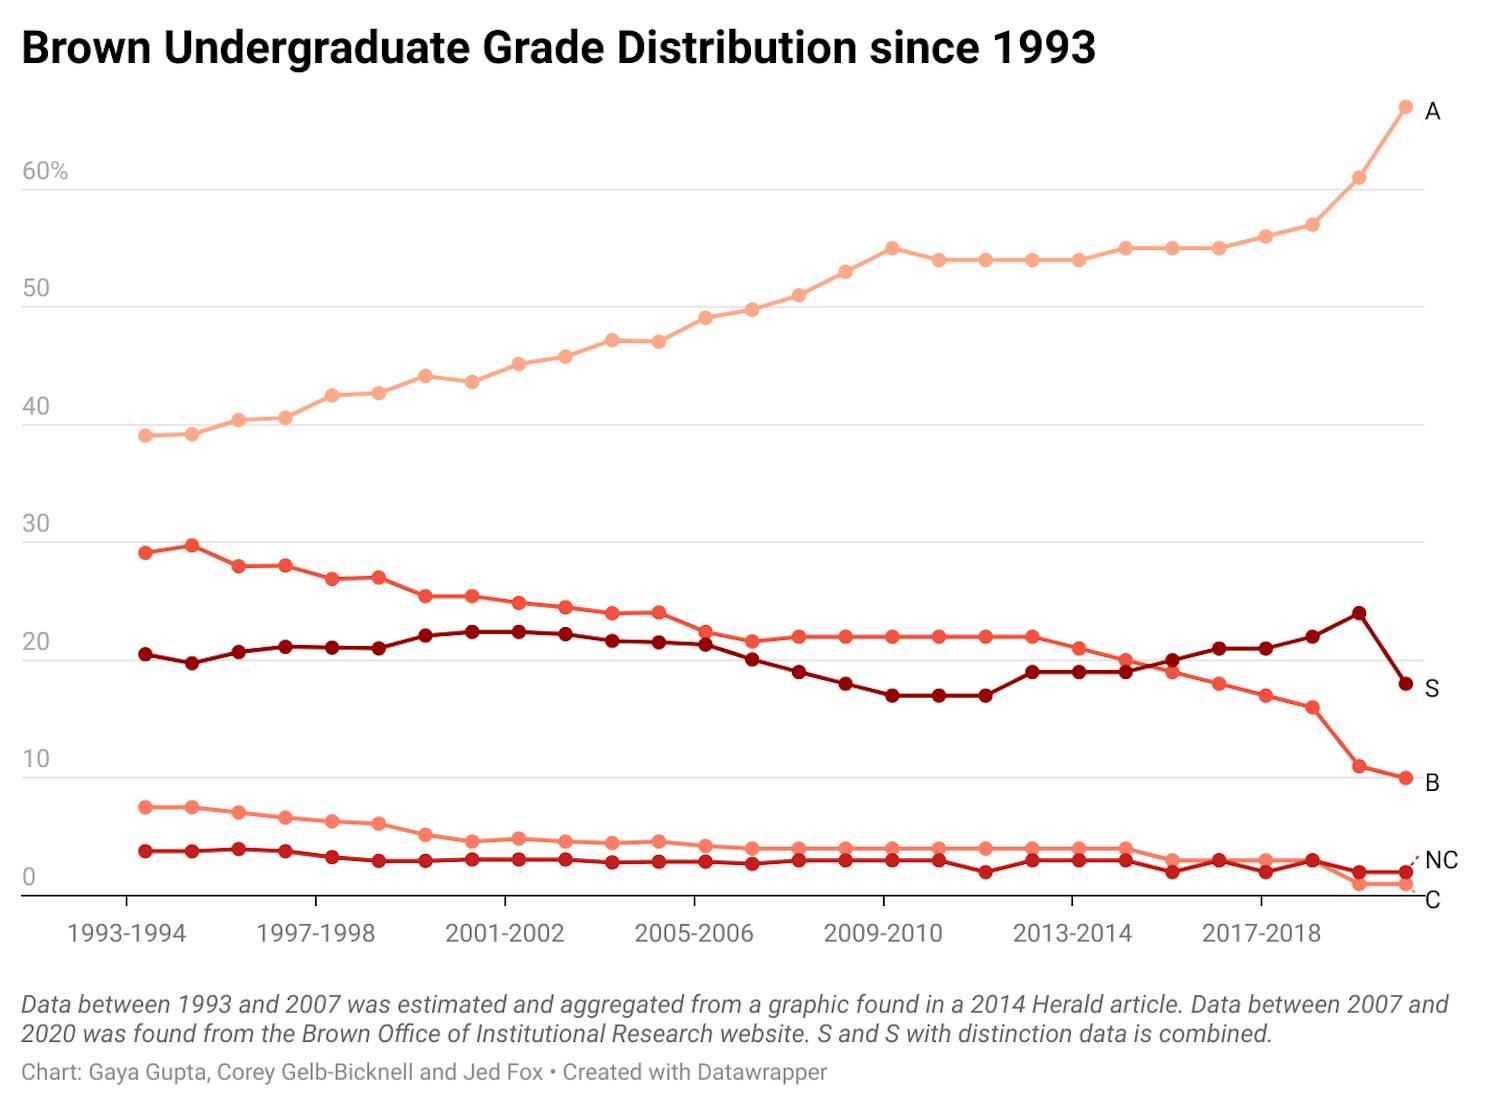 2hATL-brown-undergraduate-grade-distribution-since-1993-nbsp- (1).png